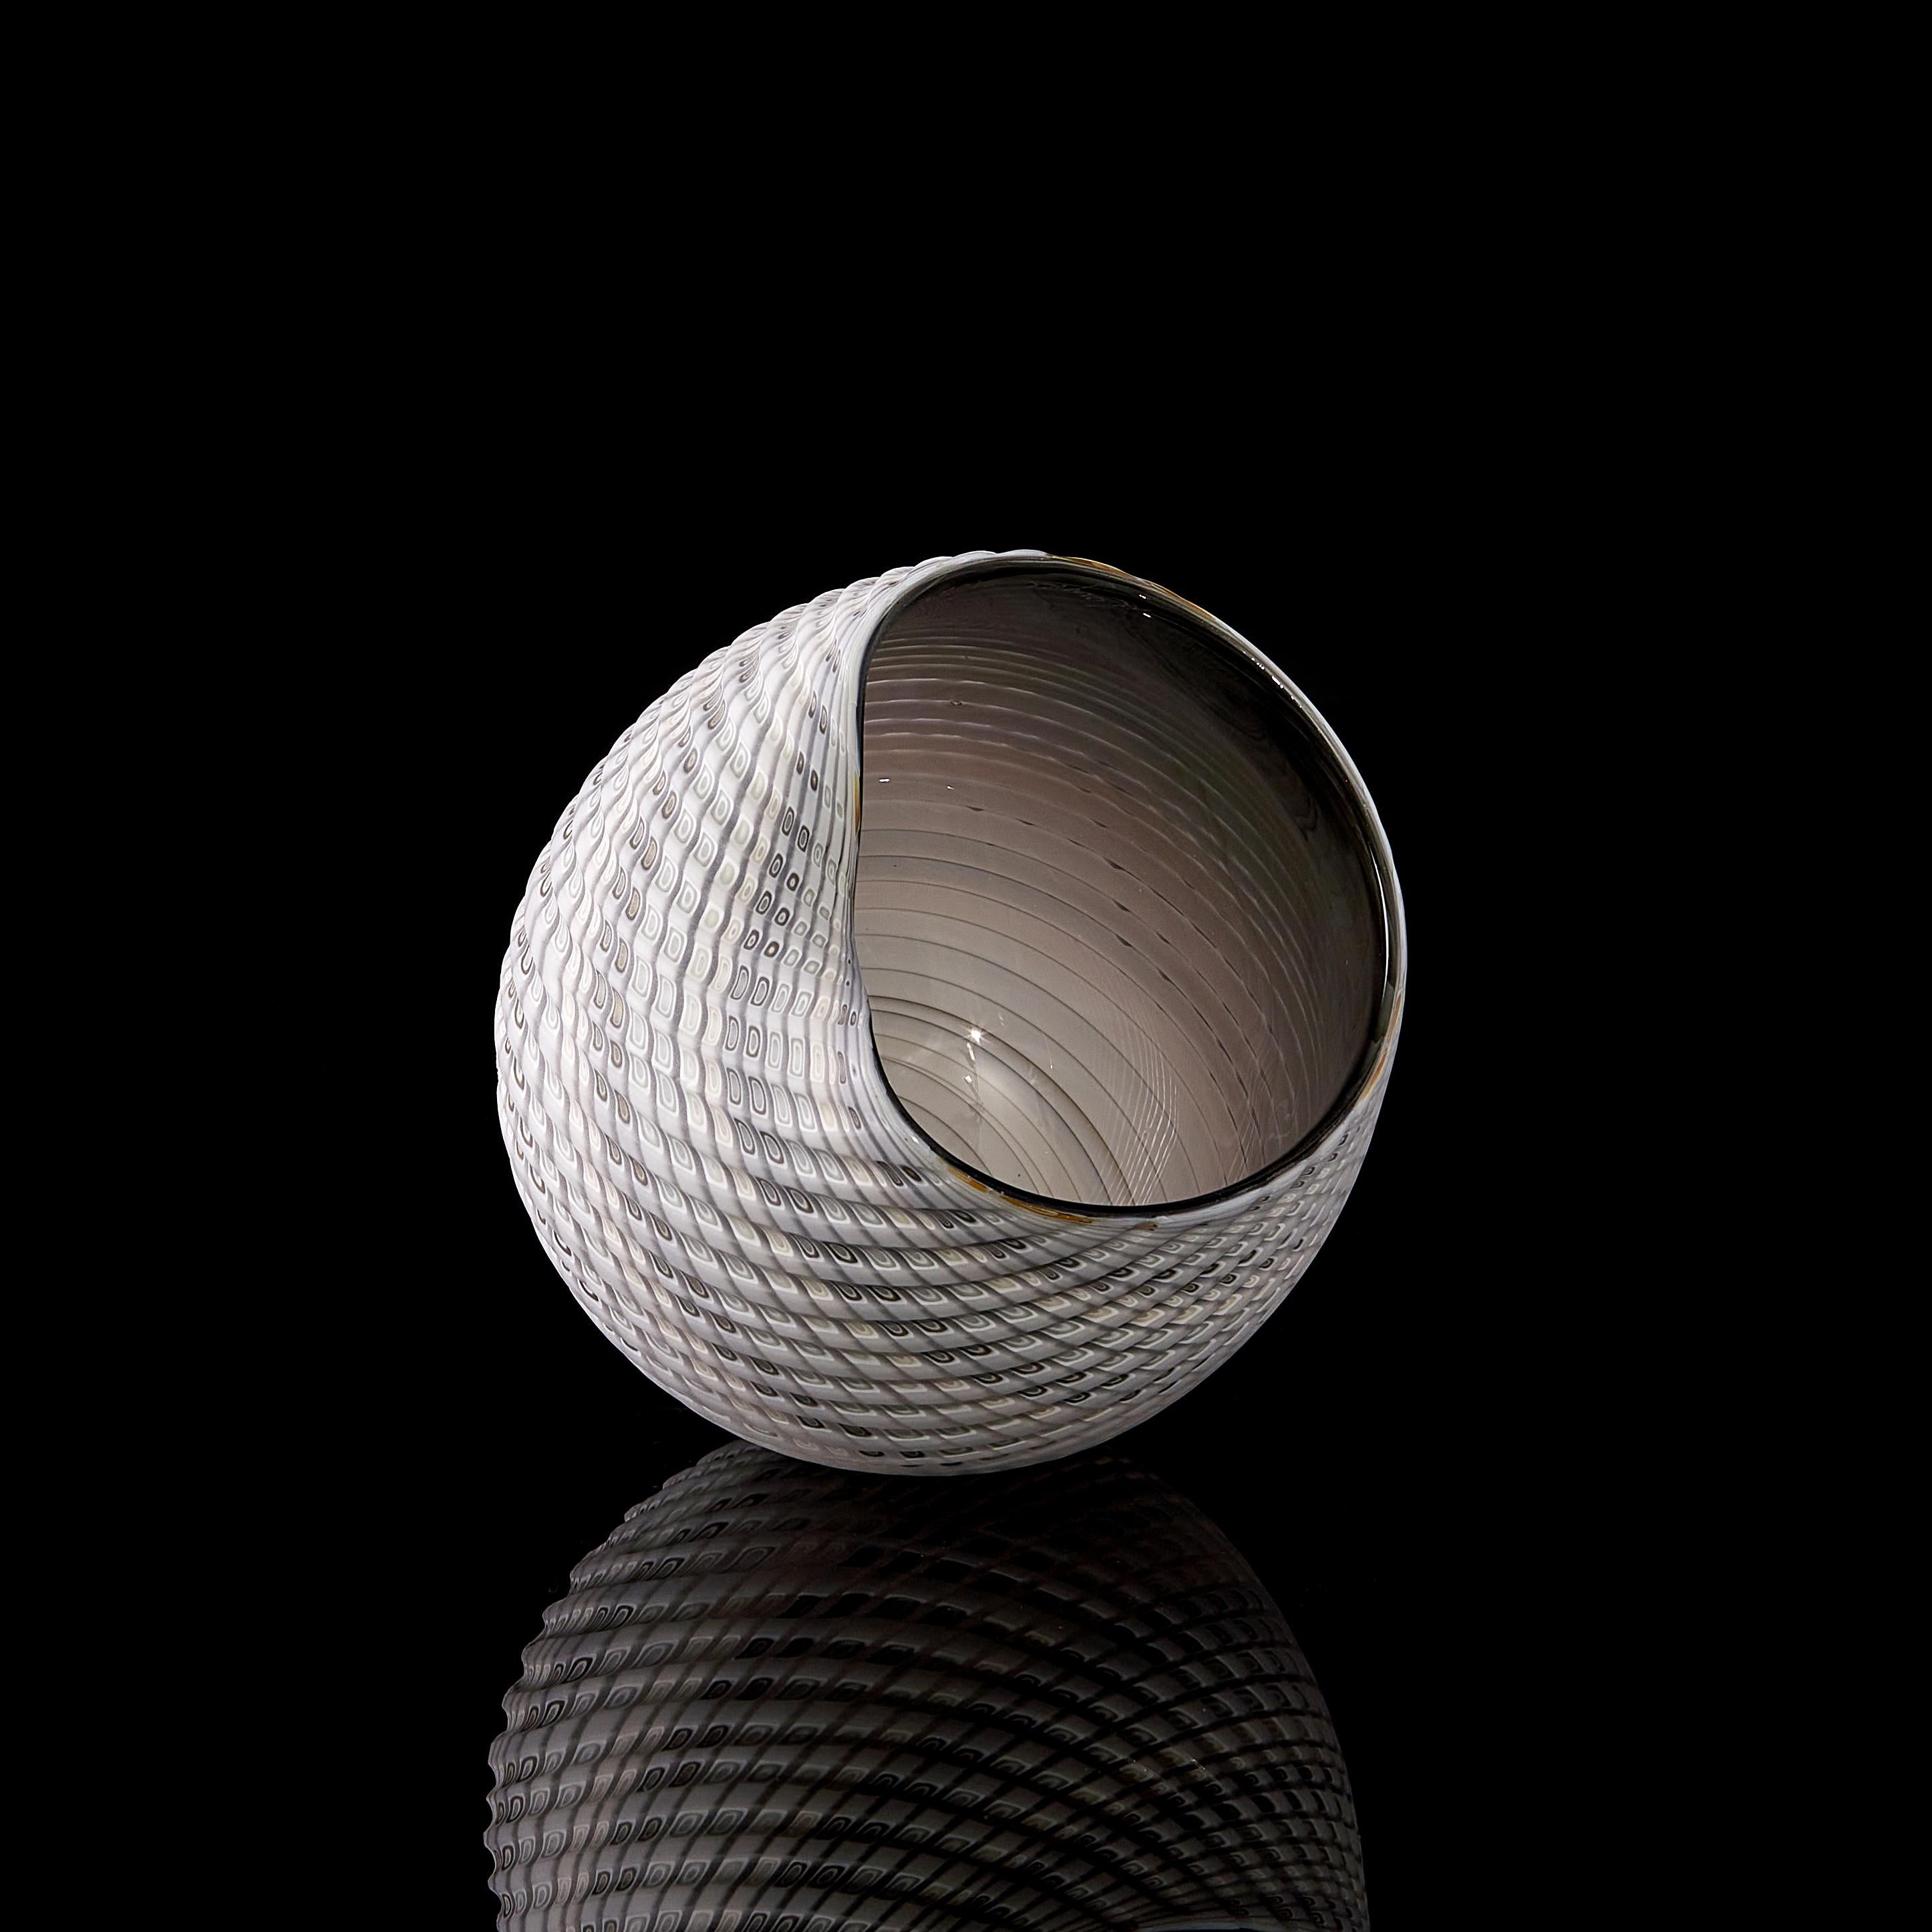 British Woven Mandala Trio, an Organic Textured Art Glass Still Life by Layne Rowe